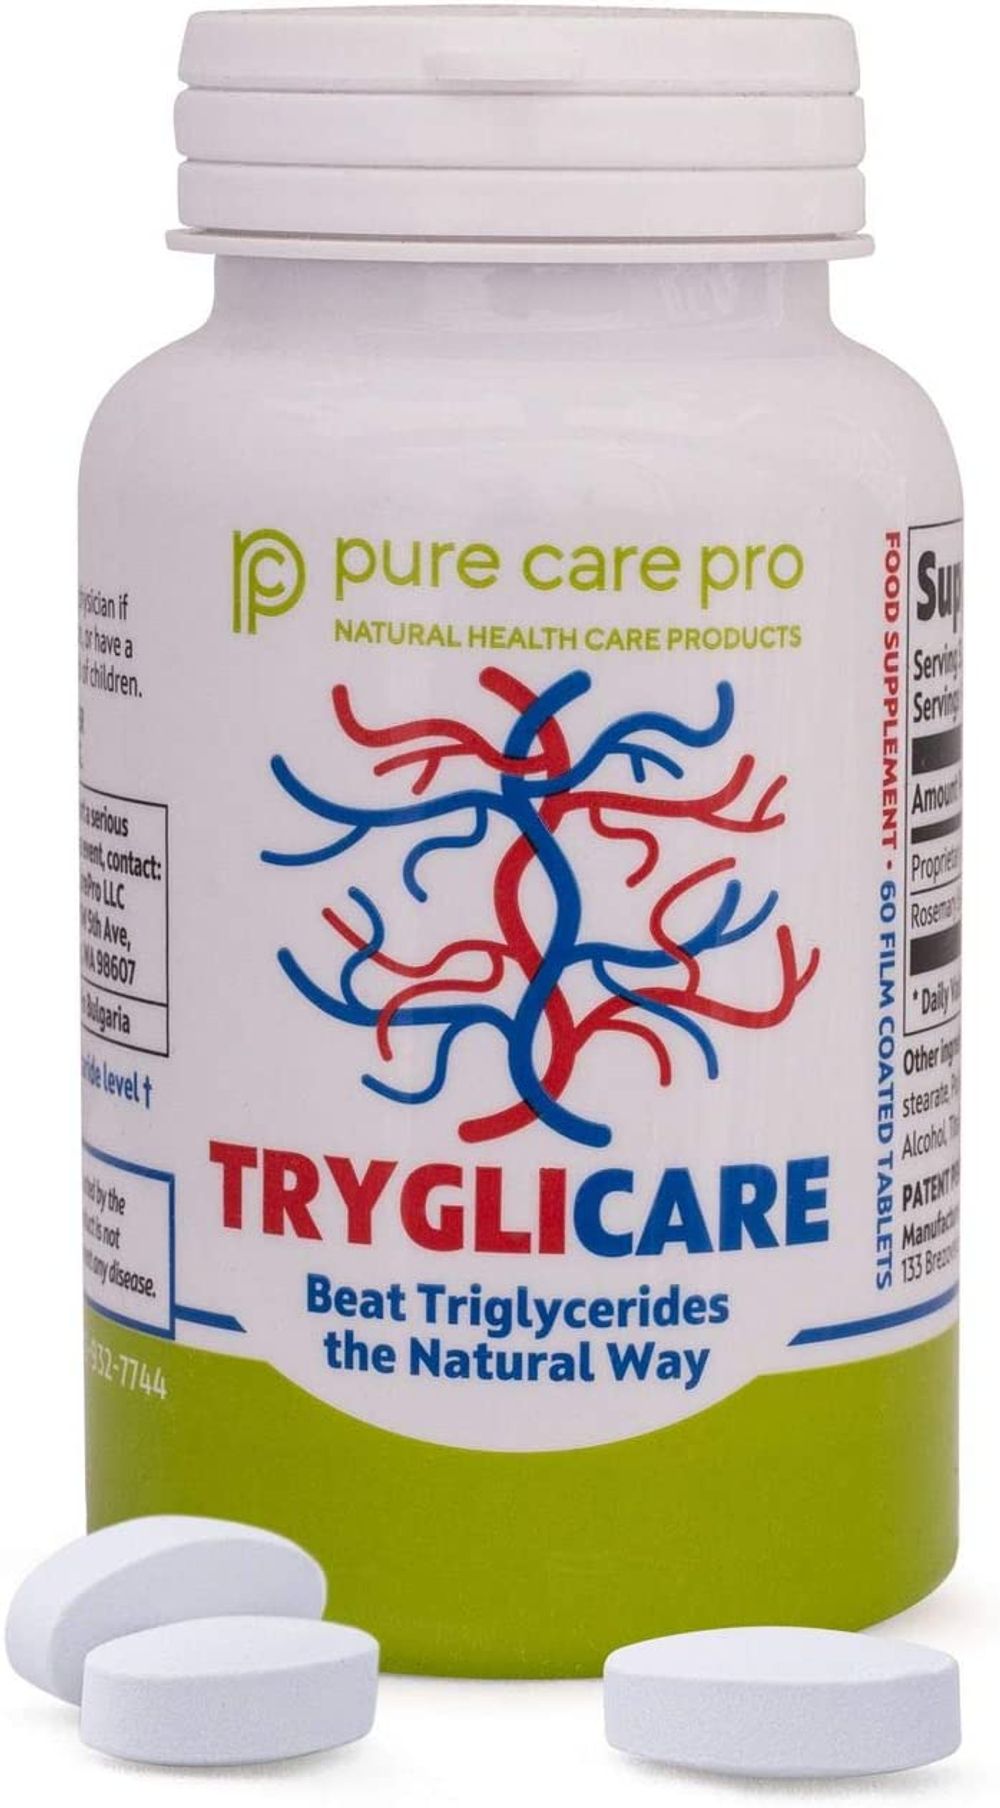 Tryglicare by Pure Care Pro